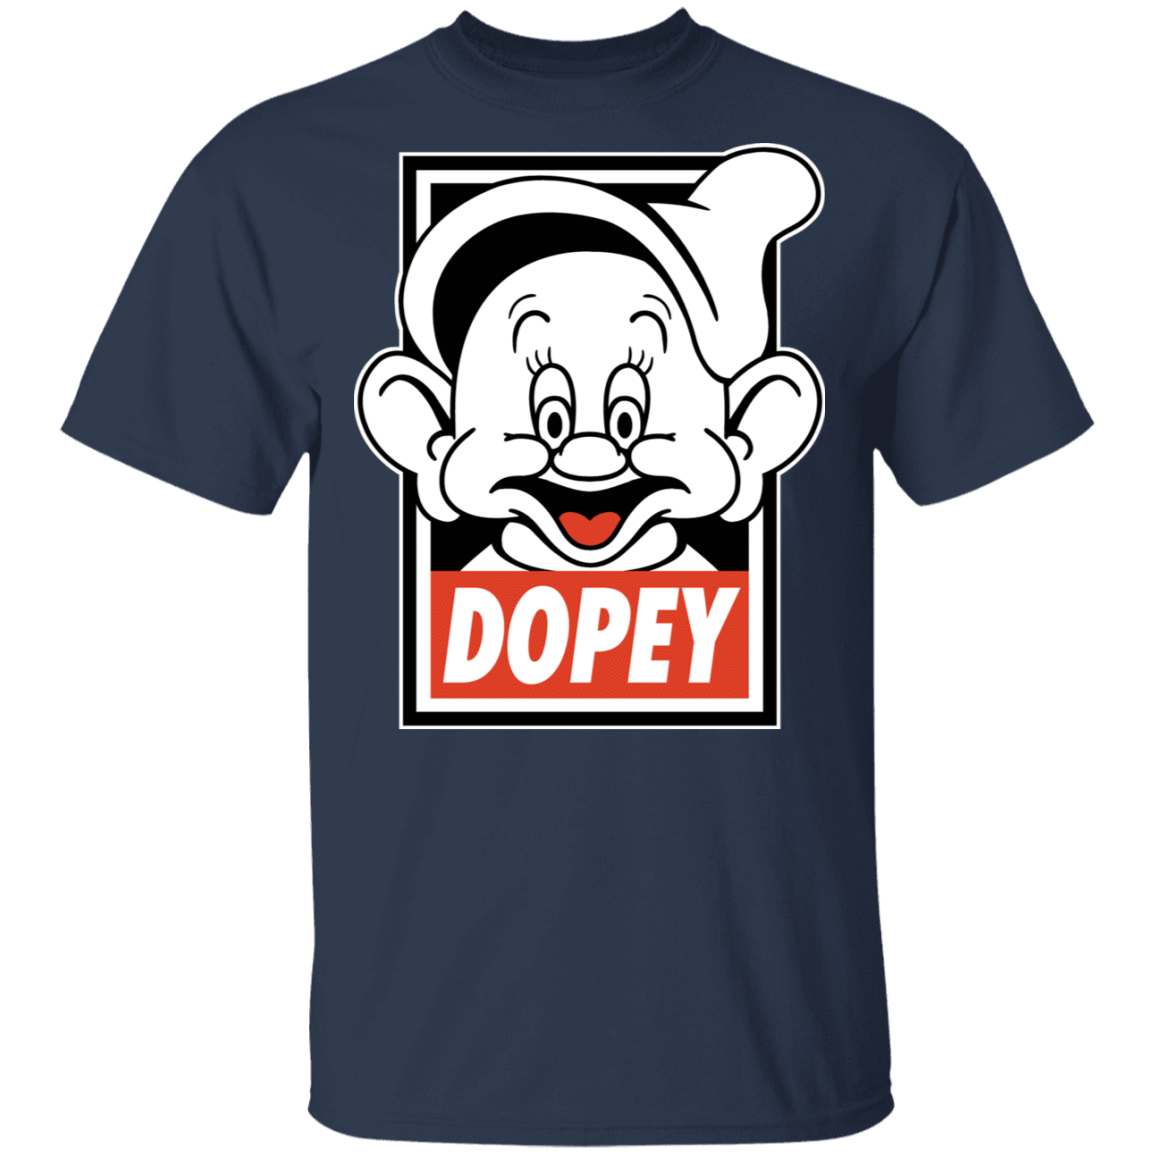 T-Shirts Navy / S Dopey T-Shirt